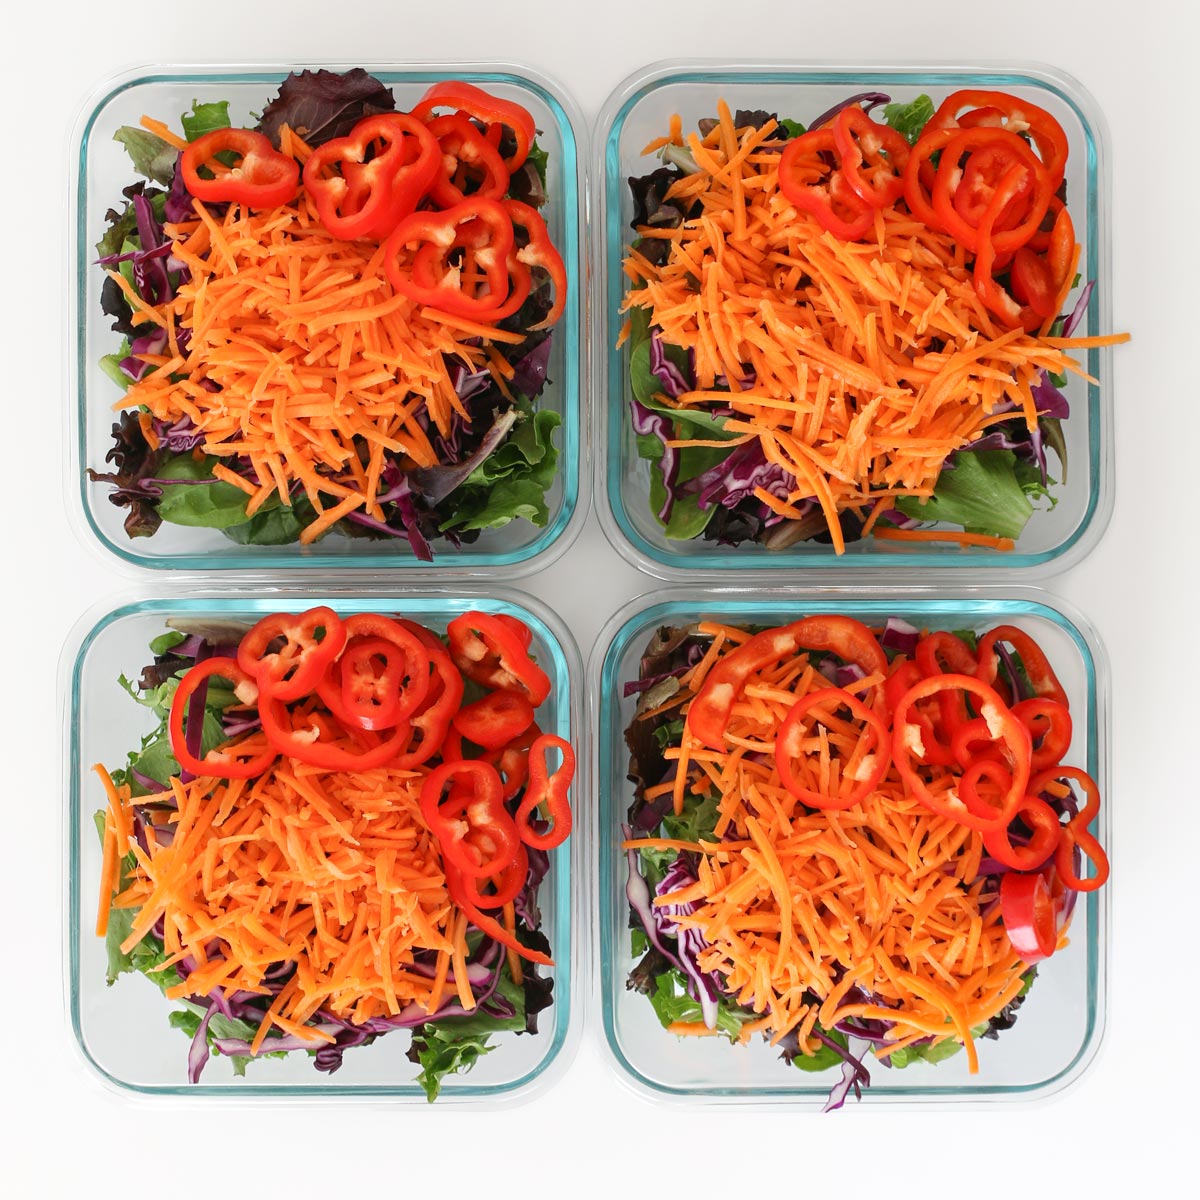 https://goodcheapeats.com/wp-content/uploads/2019/09/meal-prep-salads-prep-4.jpg